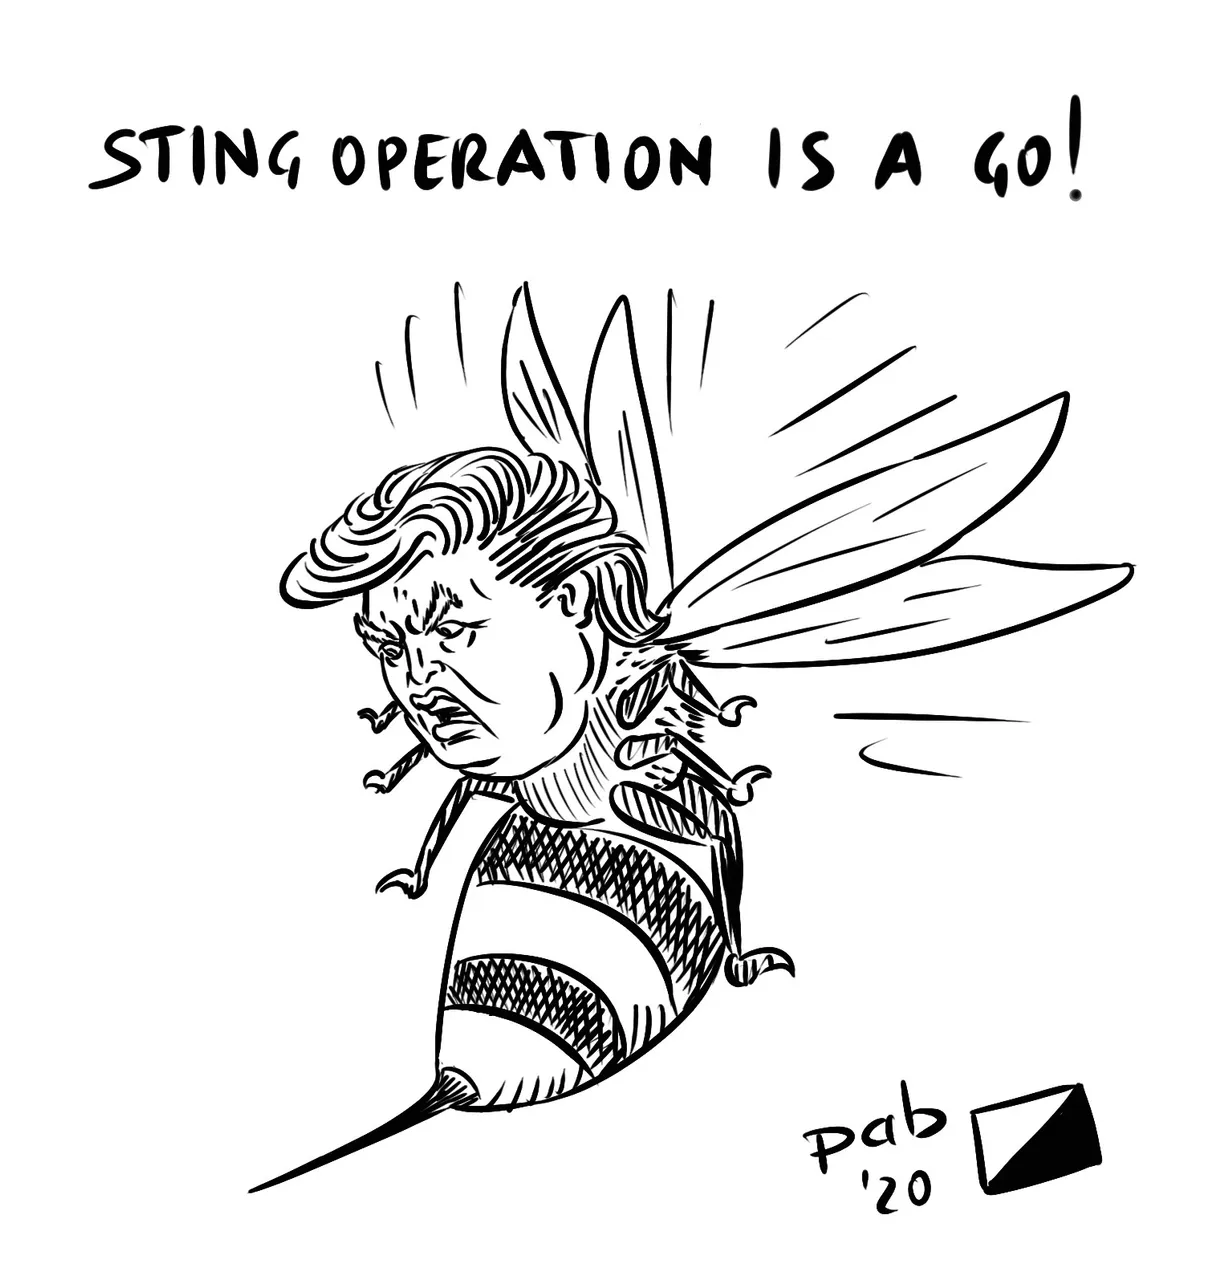 sting_operation.jpg